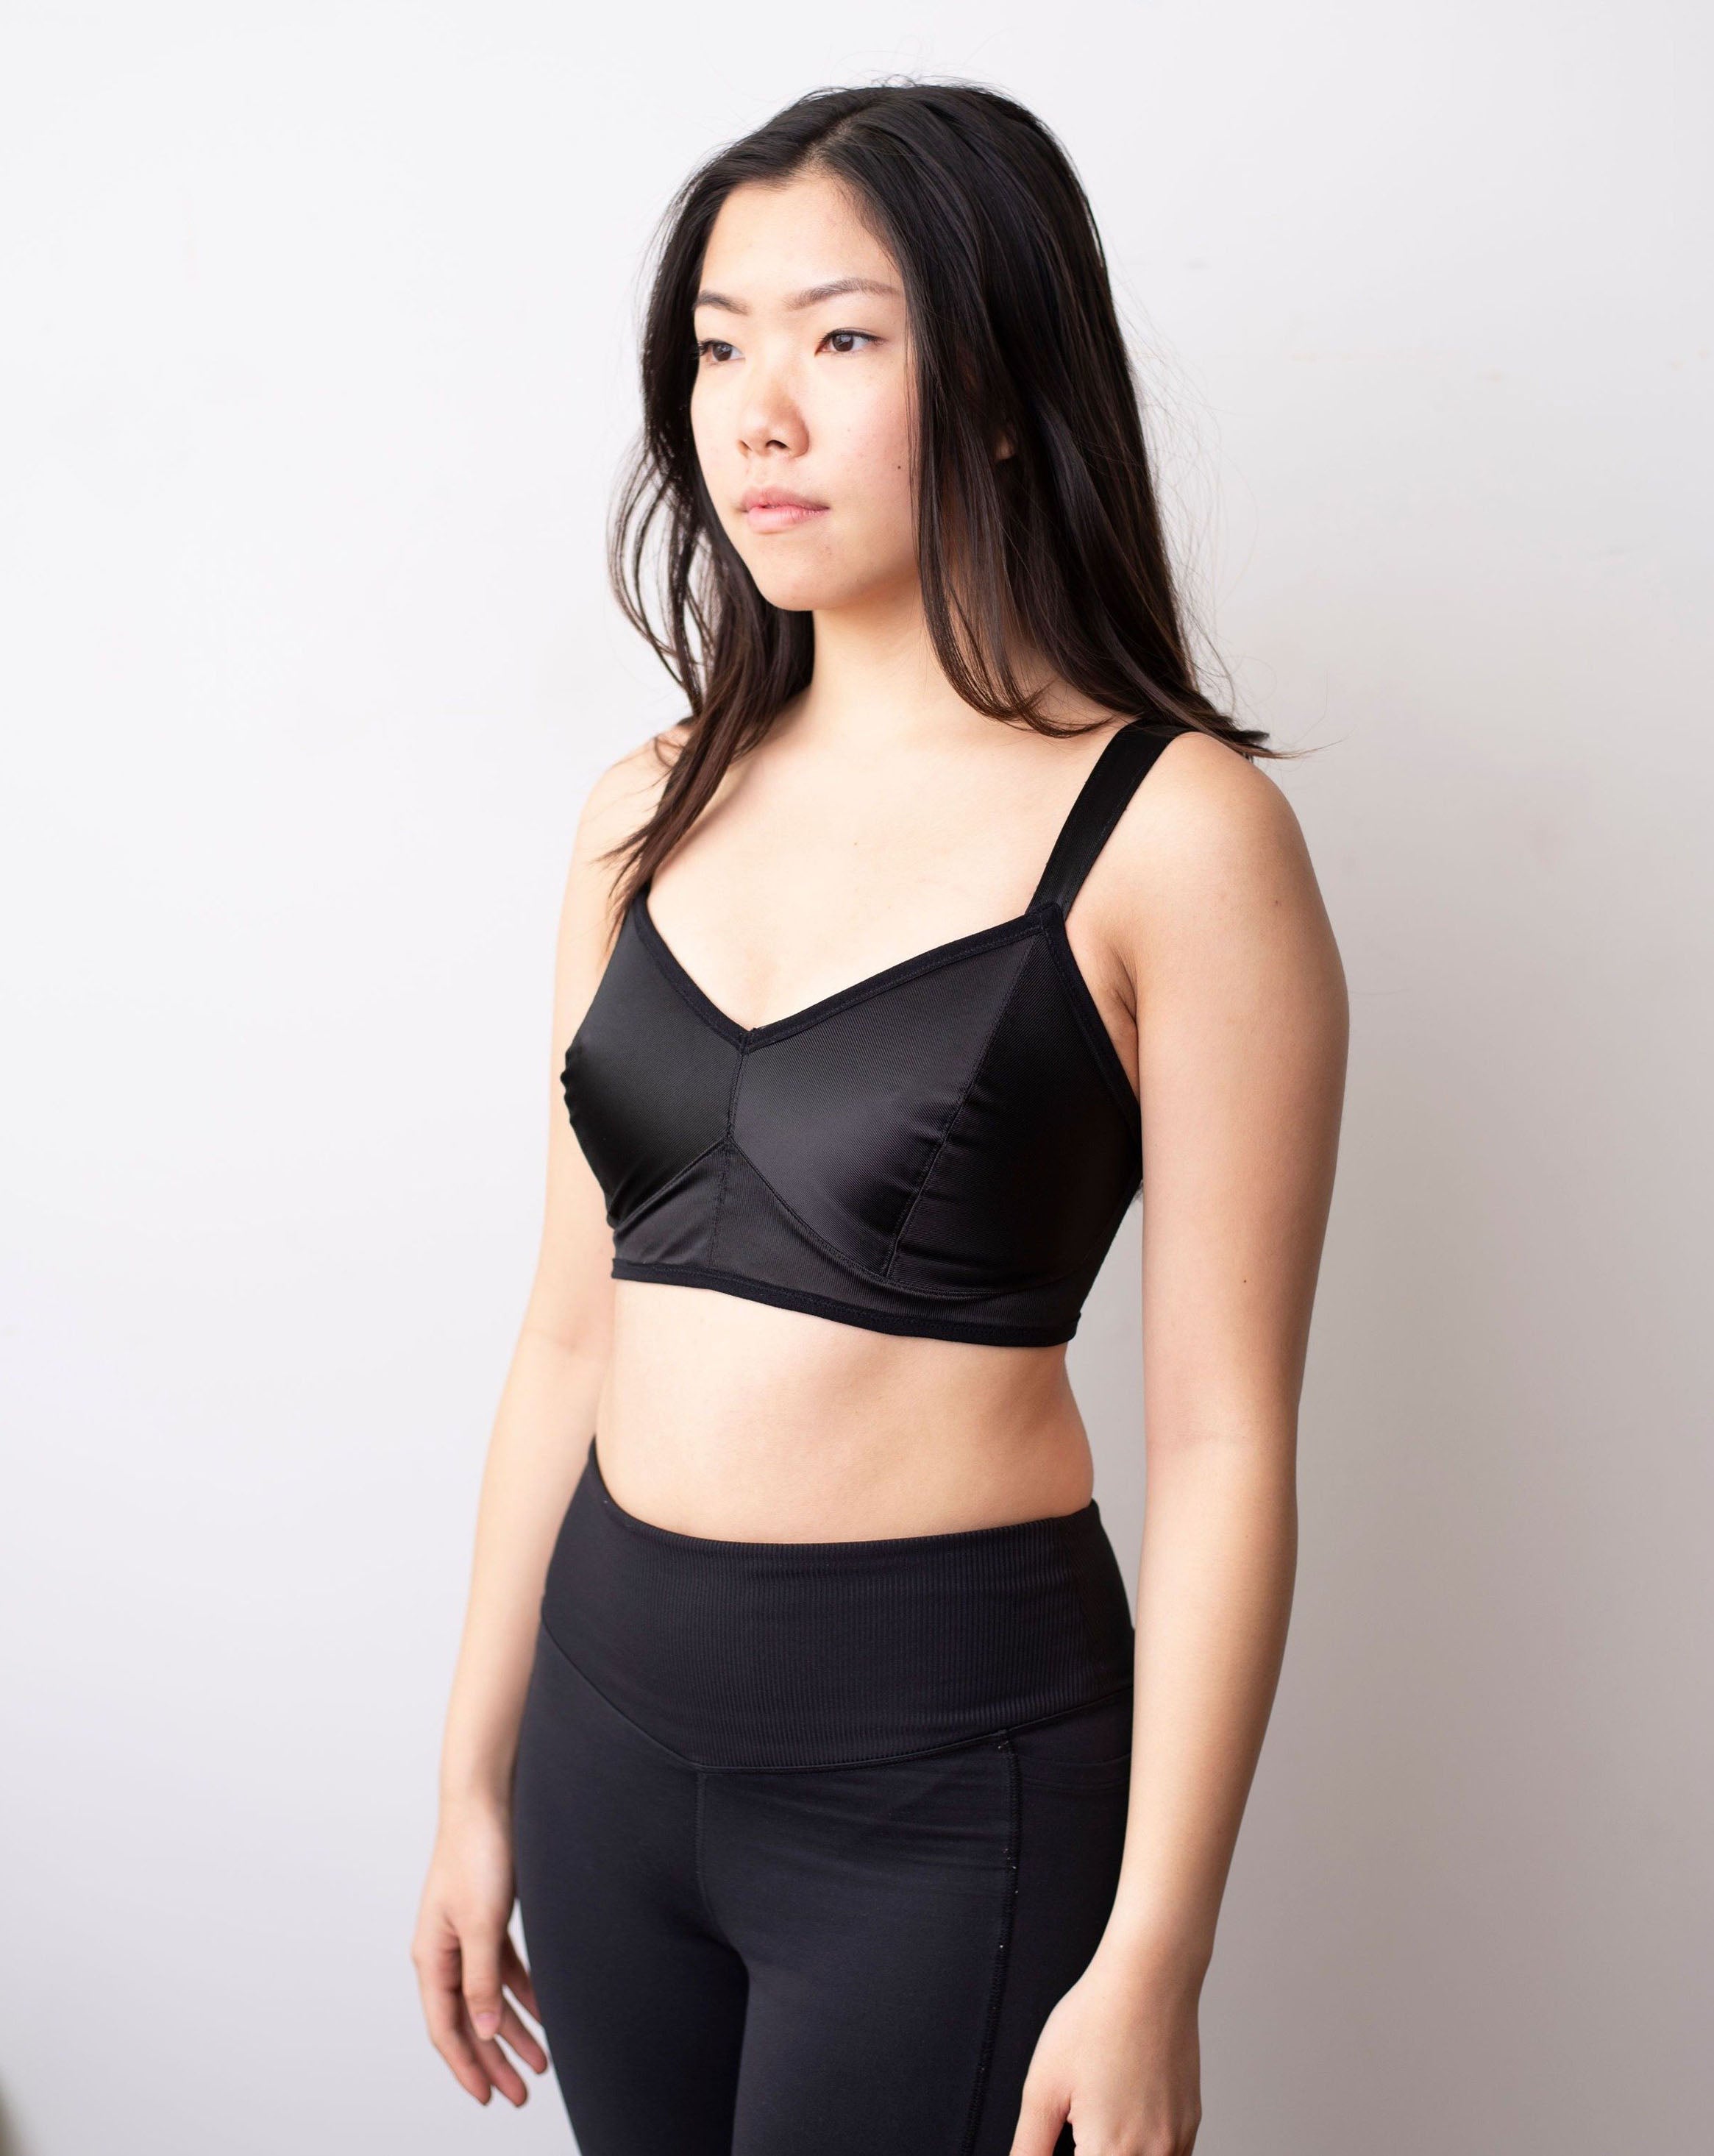 Side shot of black haired model wearing a black minimal solids bra.